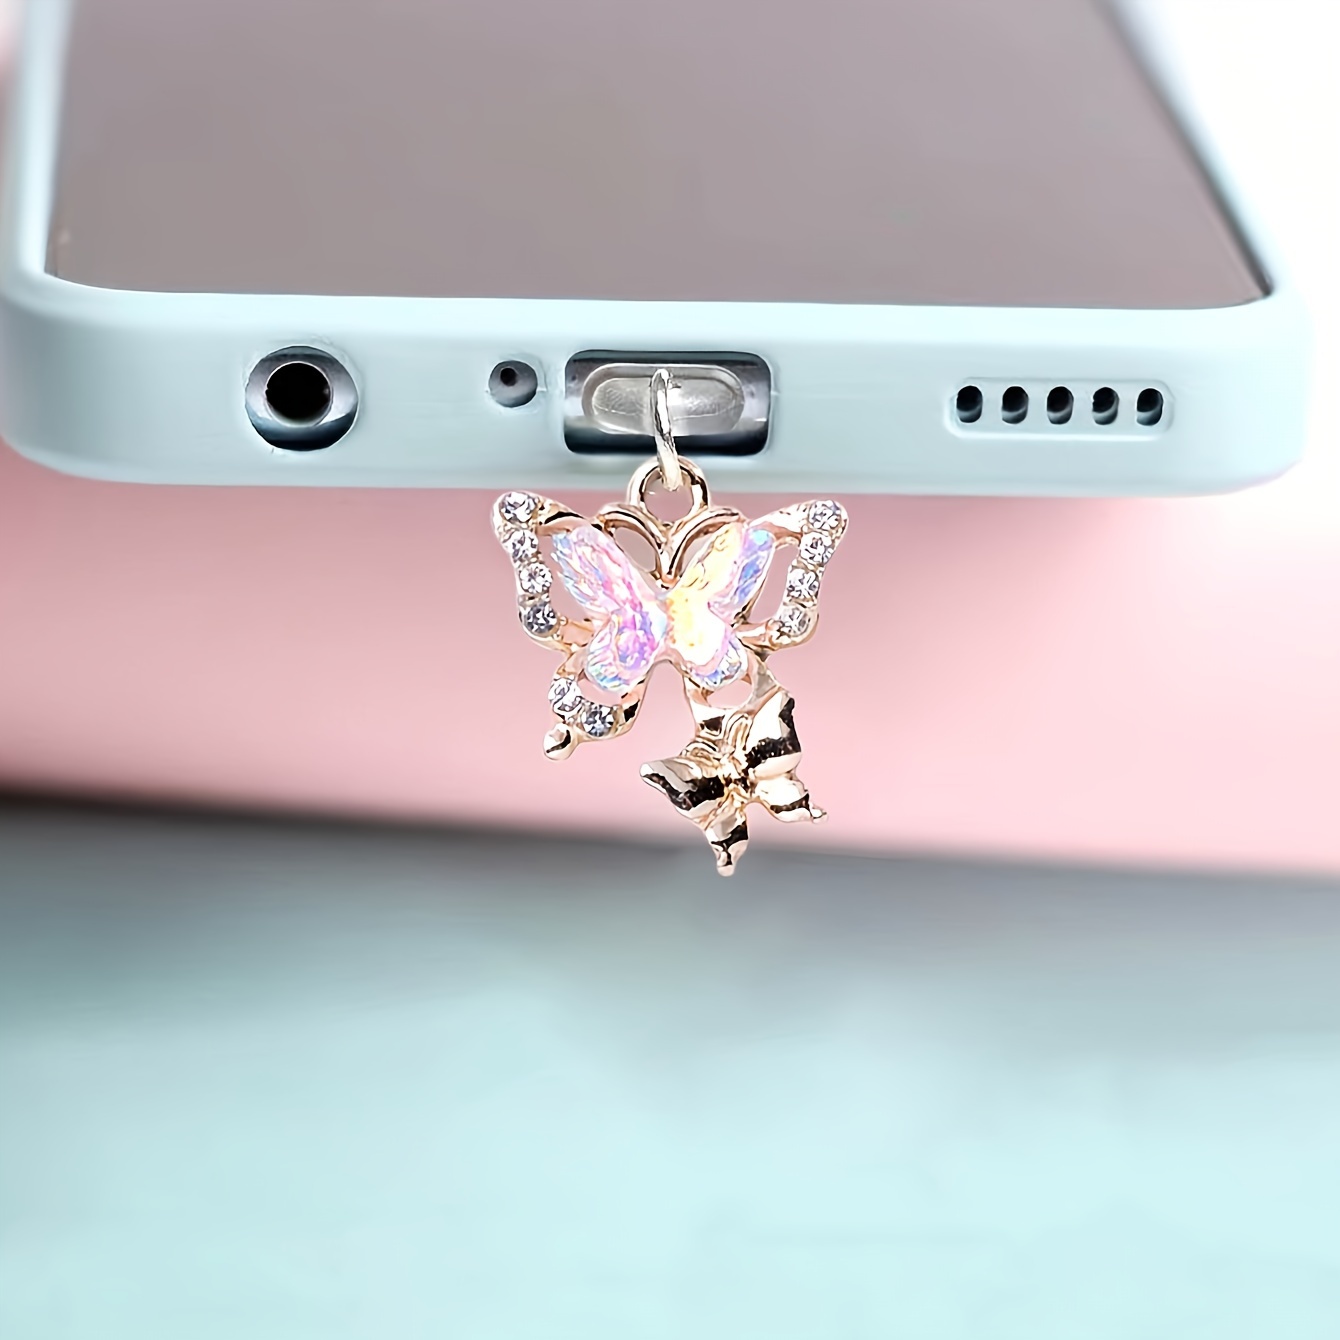  Soporte de anillo para teléfono celular, rotación de 360°,  agarre de anillo de dedo de metal con diamante para iPhone, iPod, iPad,  Samsung Galaxy y otros teléfonos inteligentes (oro rosa) 